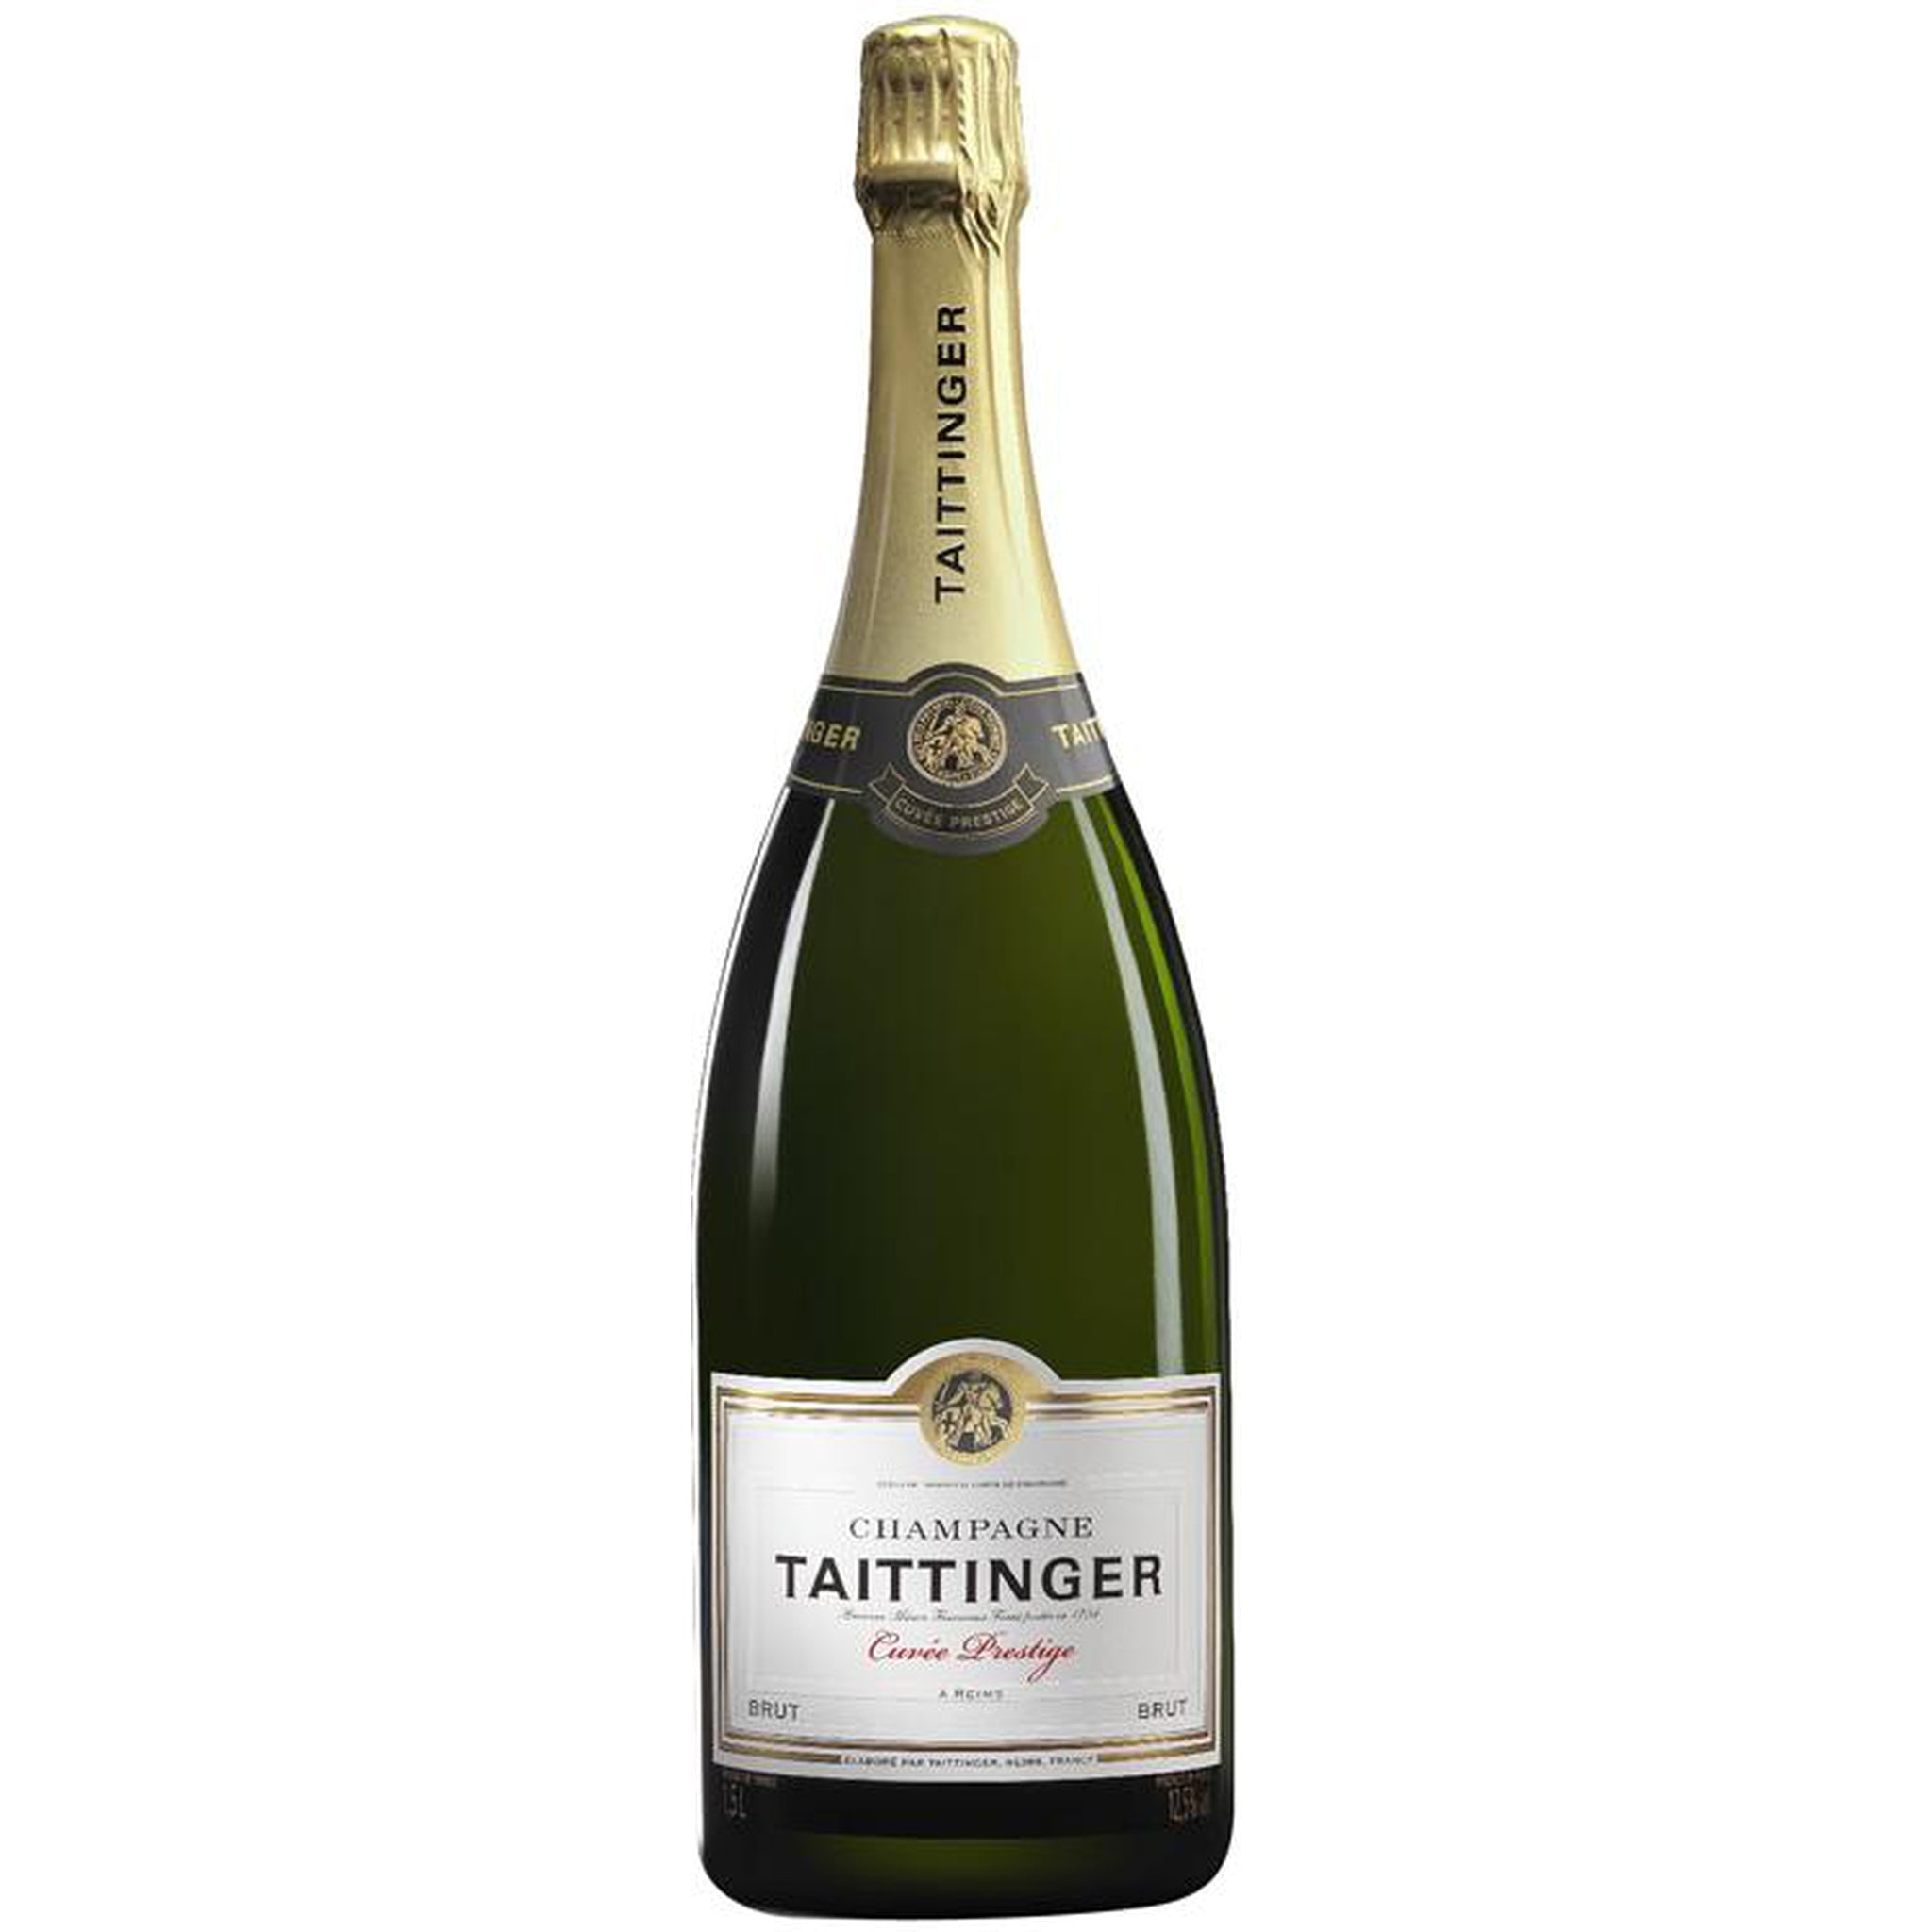 Mr. Booze.dk Taittinger Champagne Cuve?e Prestige MG (150 cl.)